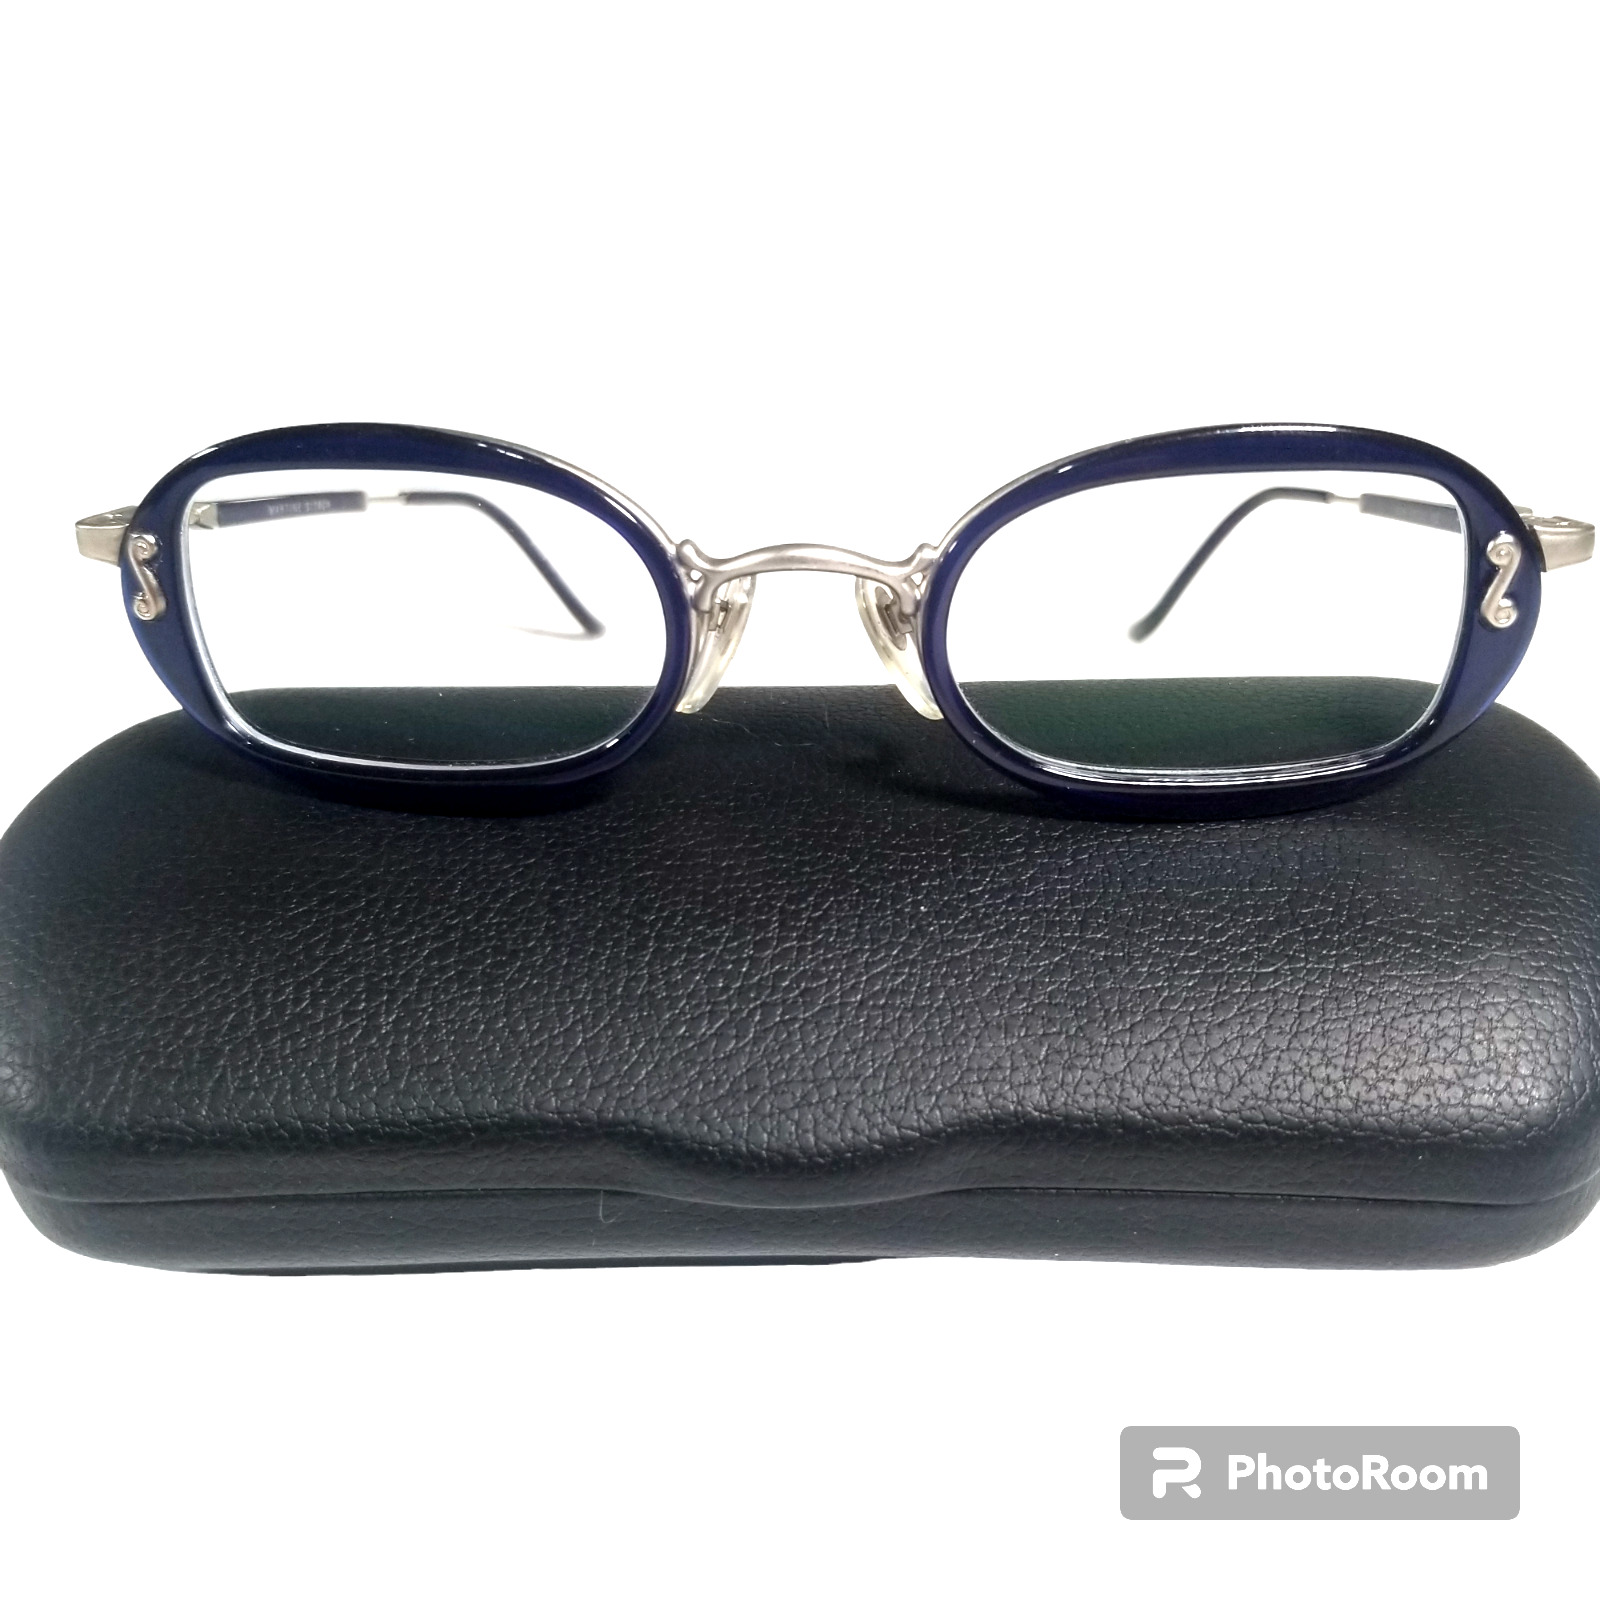 Martine Sitbon Eyeglasses Frames Vintage Wire Resin 6516 Retro Straight Tight